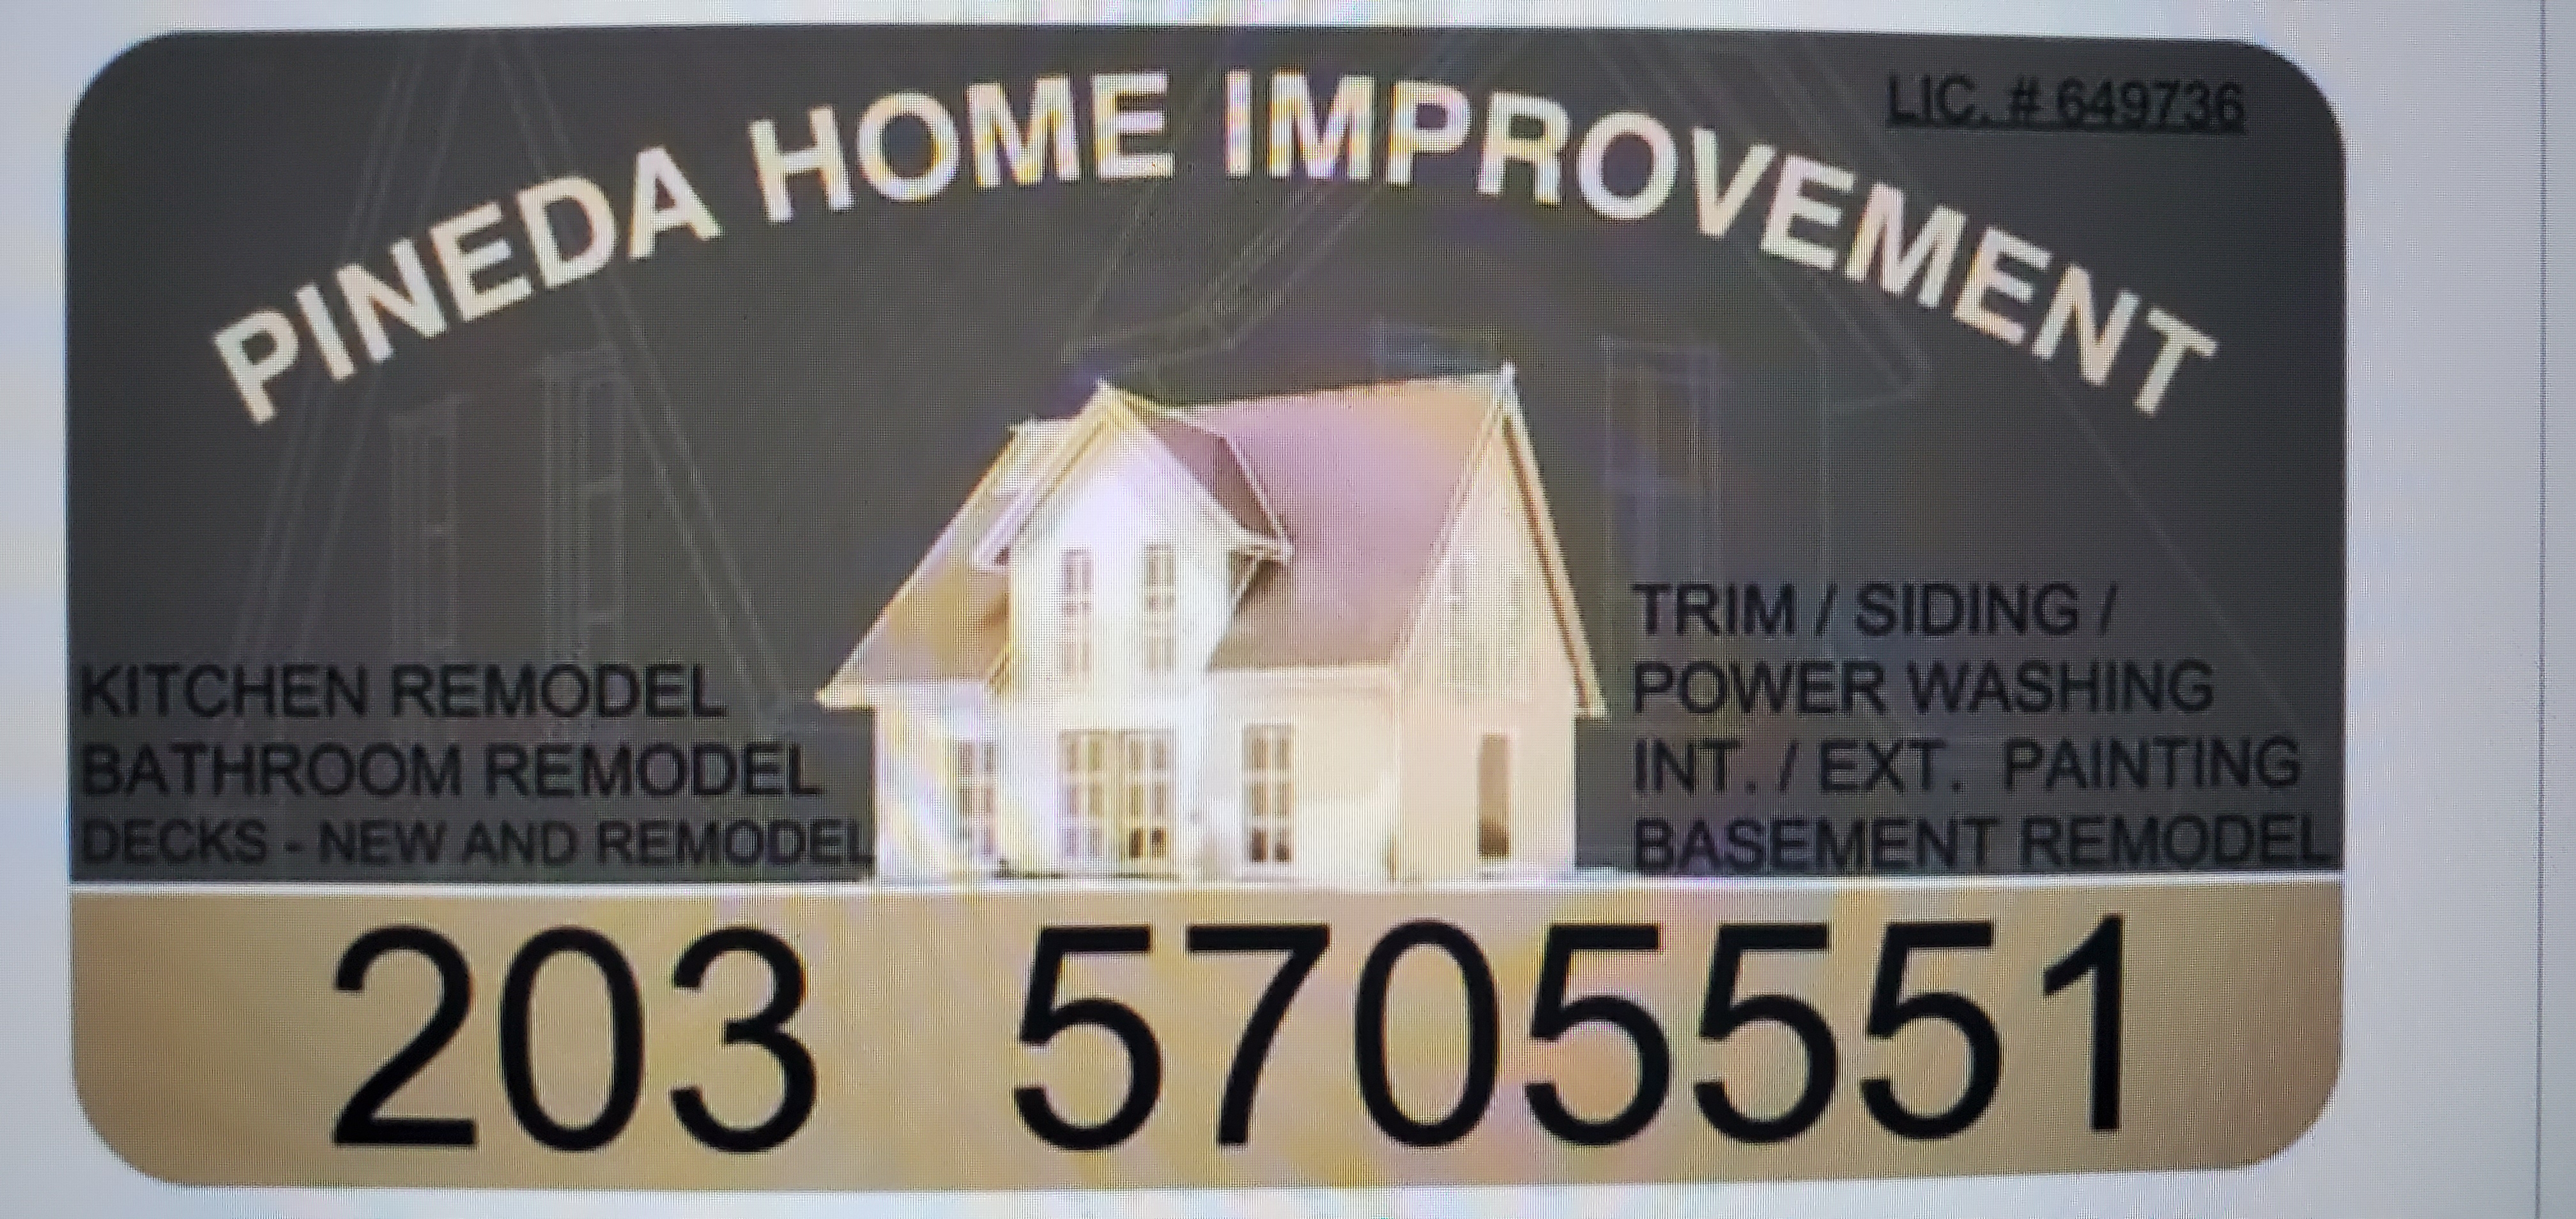 Pineda Home Improvement Logo